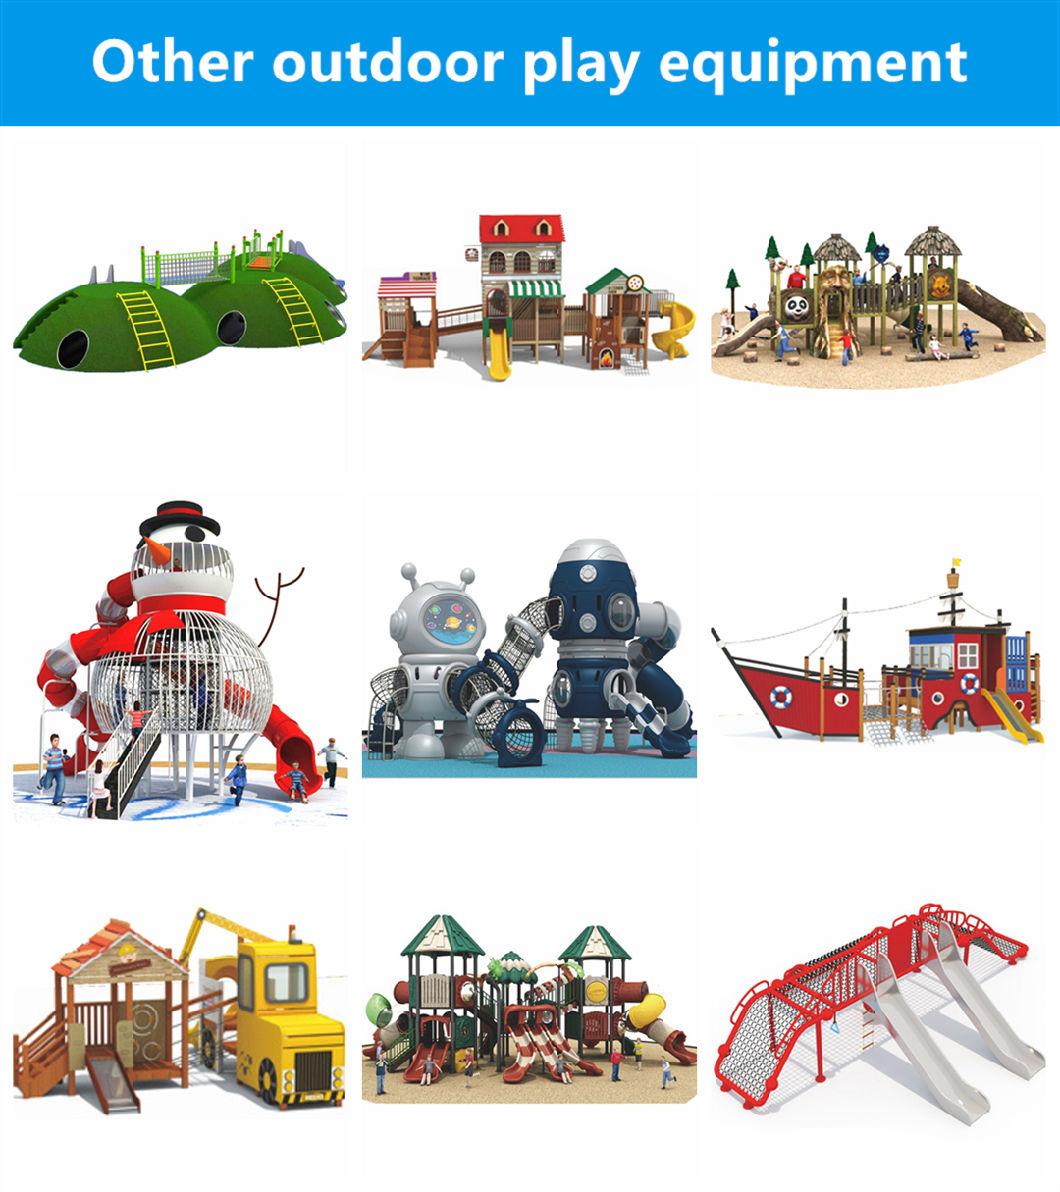 Outdoor Park Kids Playground Equipment Space Series Climbing Slide Yq39